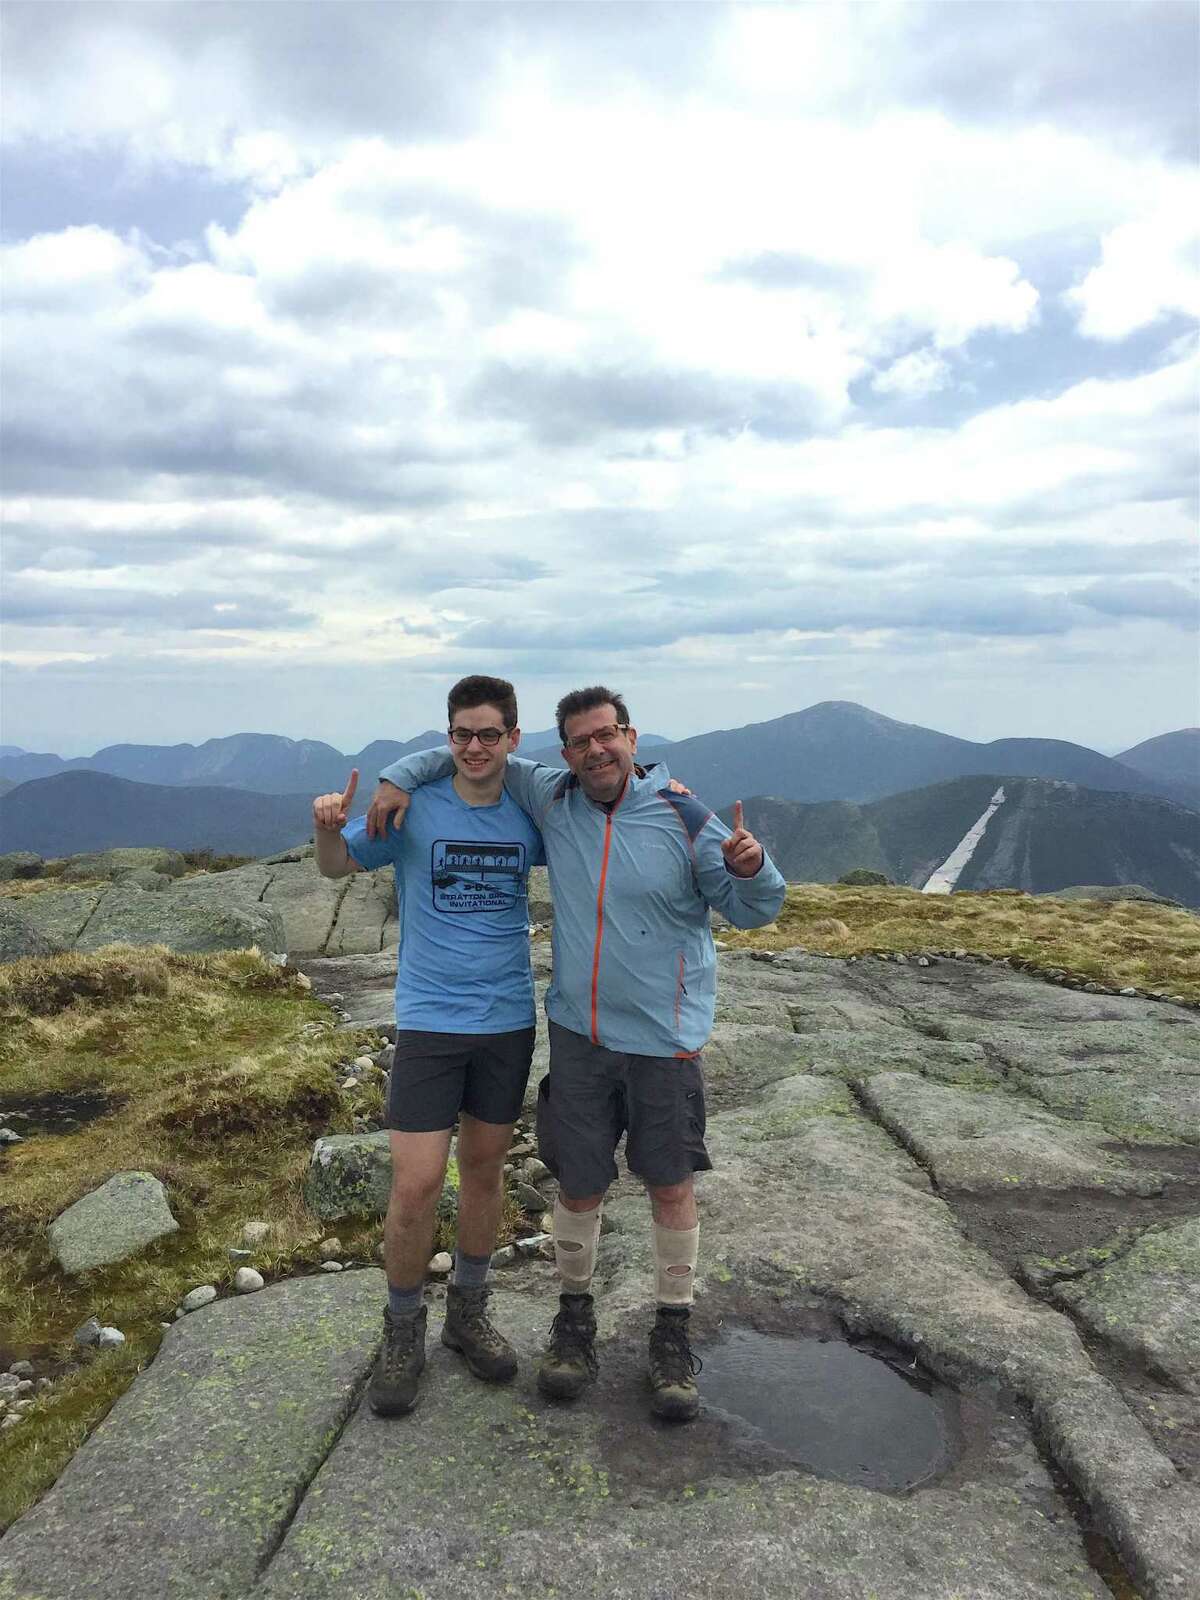 Ben and Alan Shmaruk, of Westport, on a hiking trip to the Adirondacks.